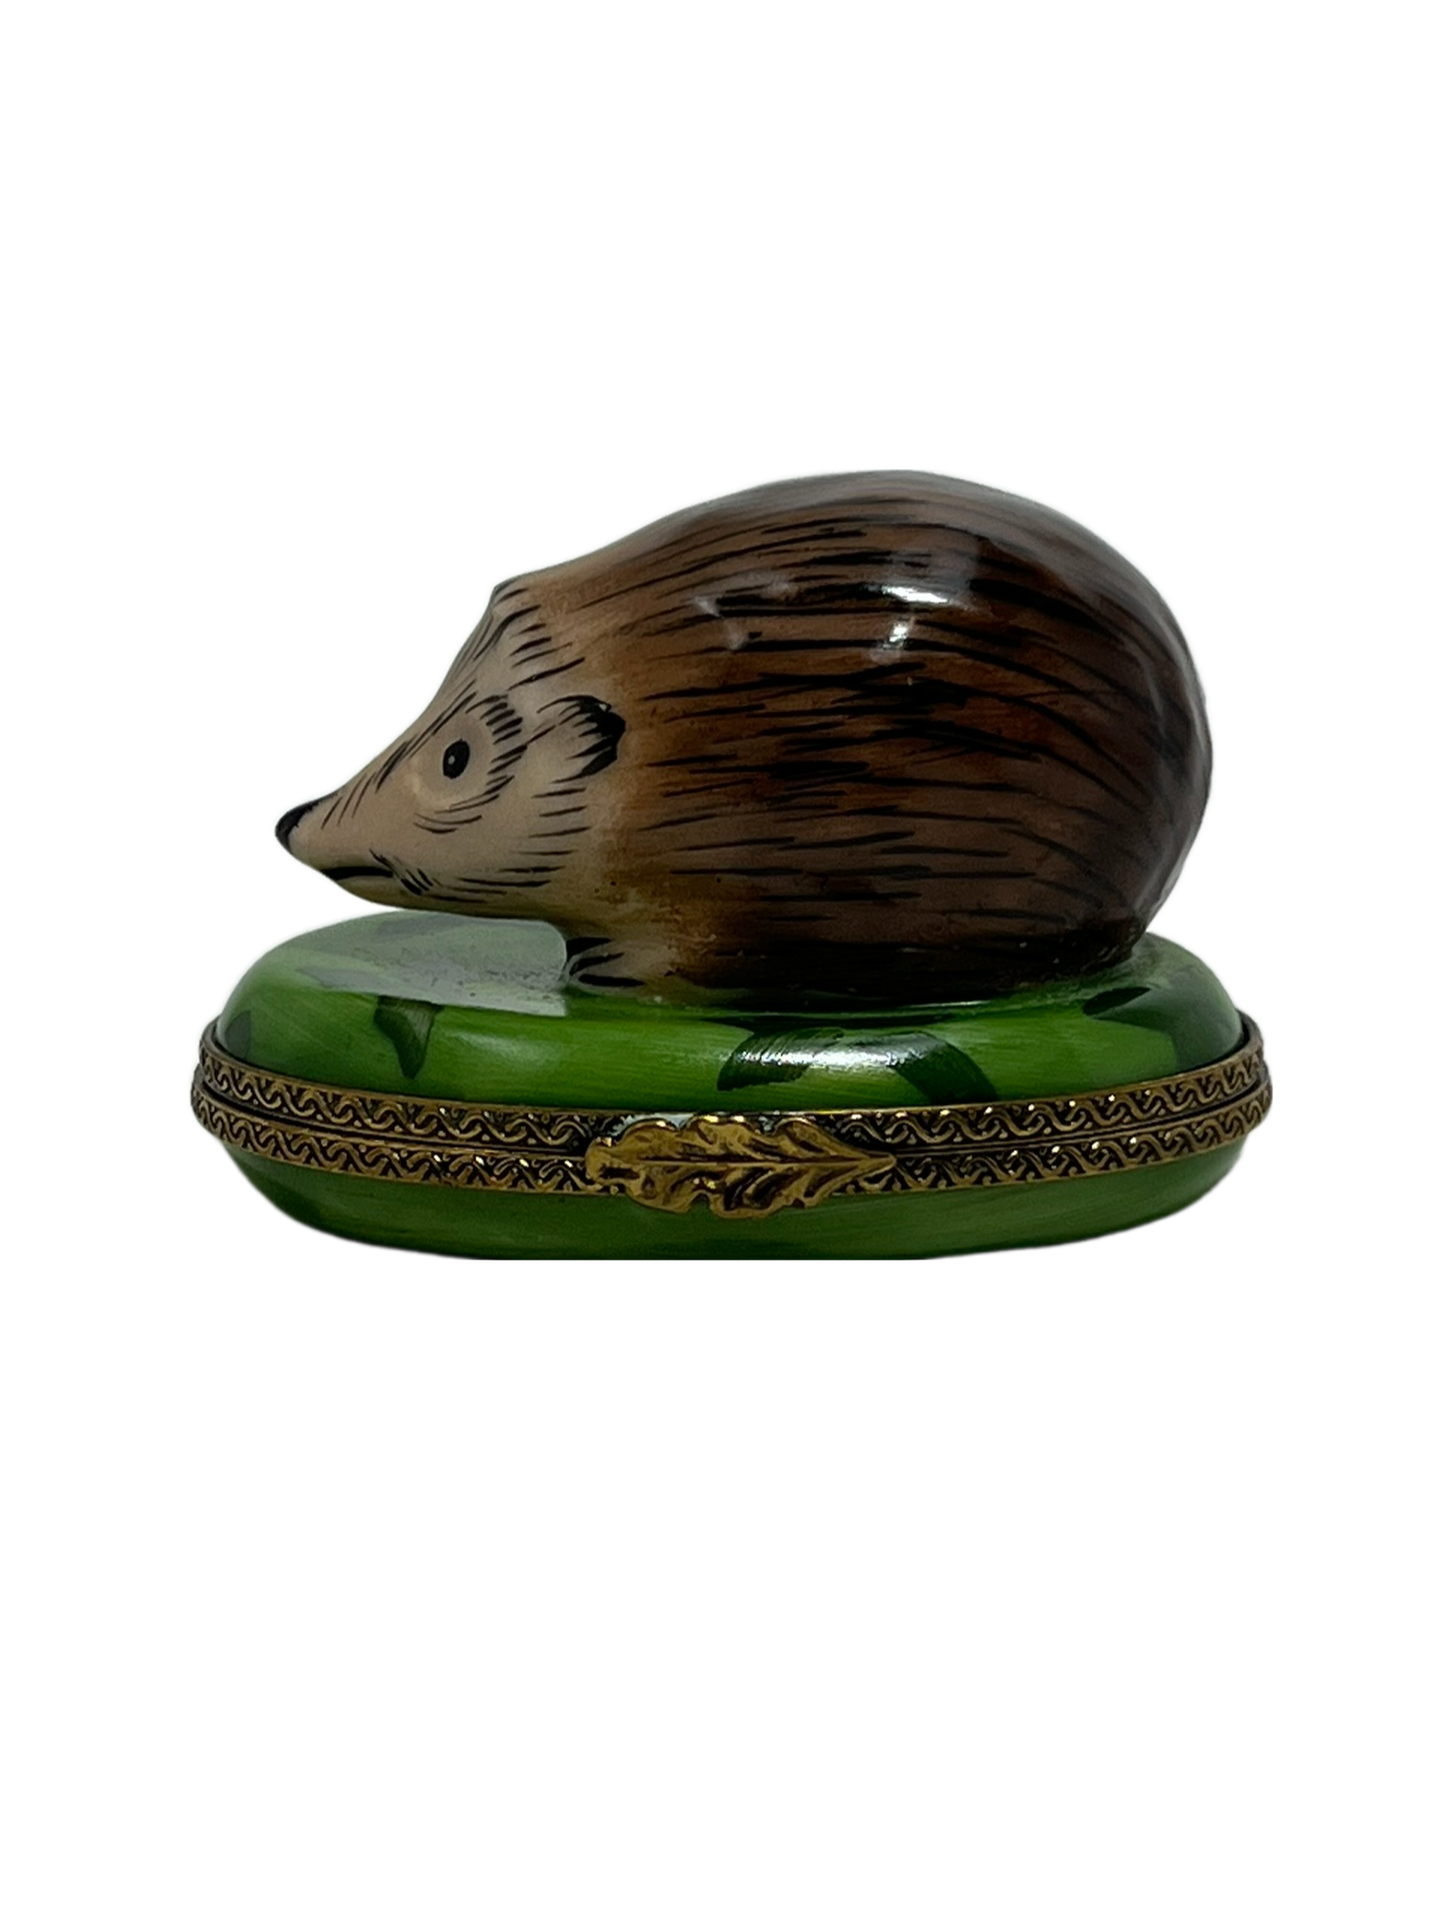 Hedgie Haven: Limoges Box - Adorable Hedgehog Collectible